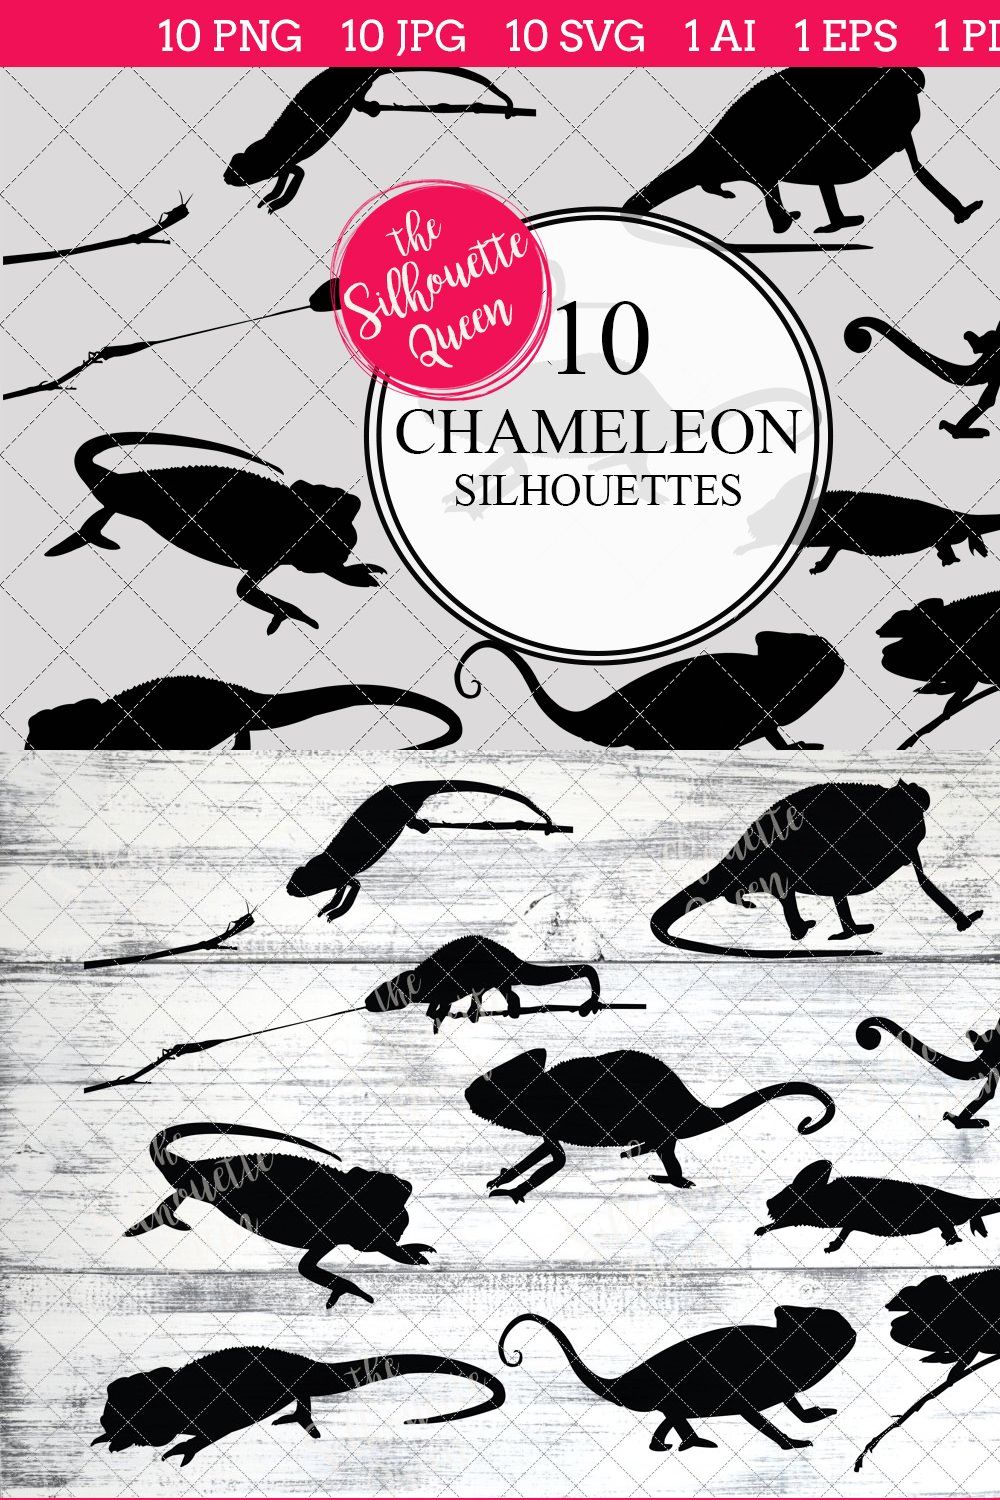 Chameleon Silhouette Clipart pinterest preview image.